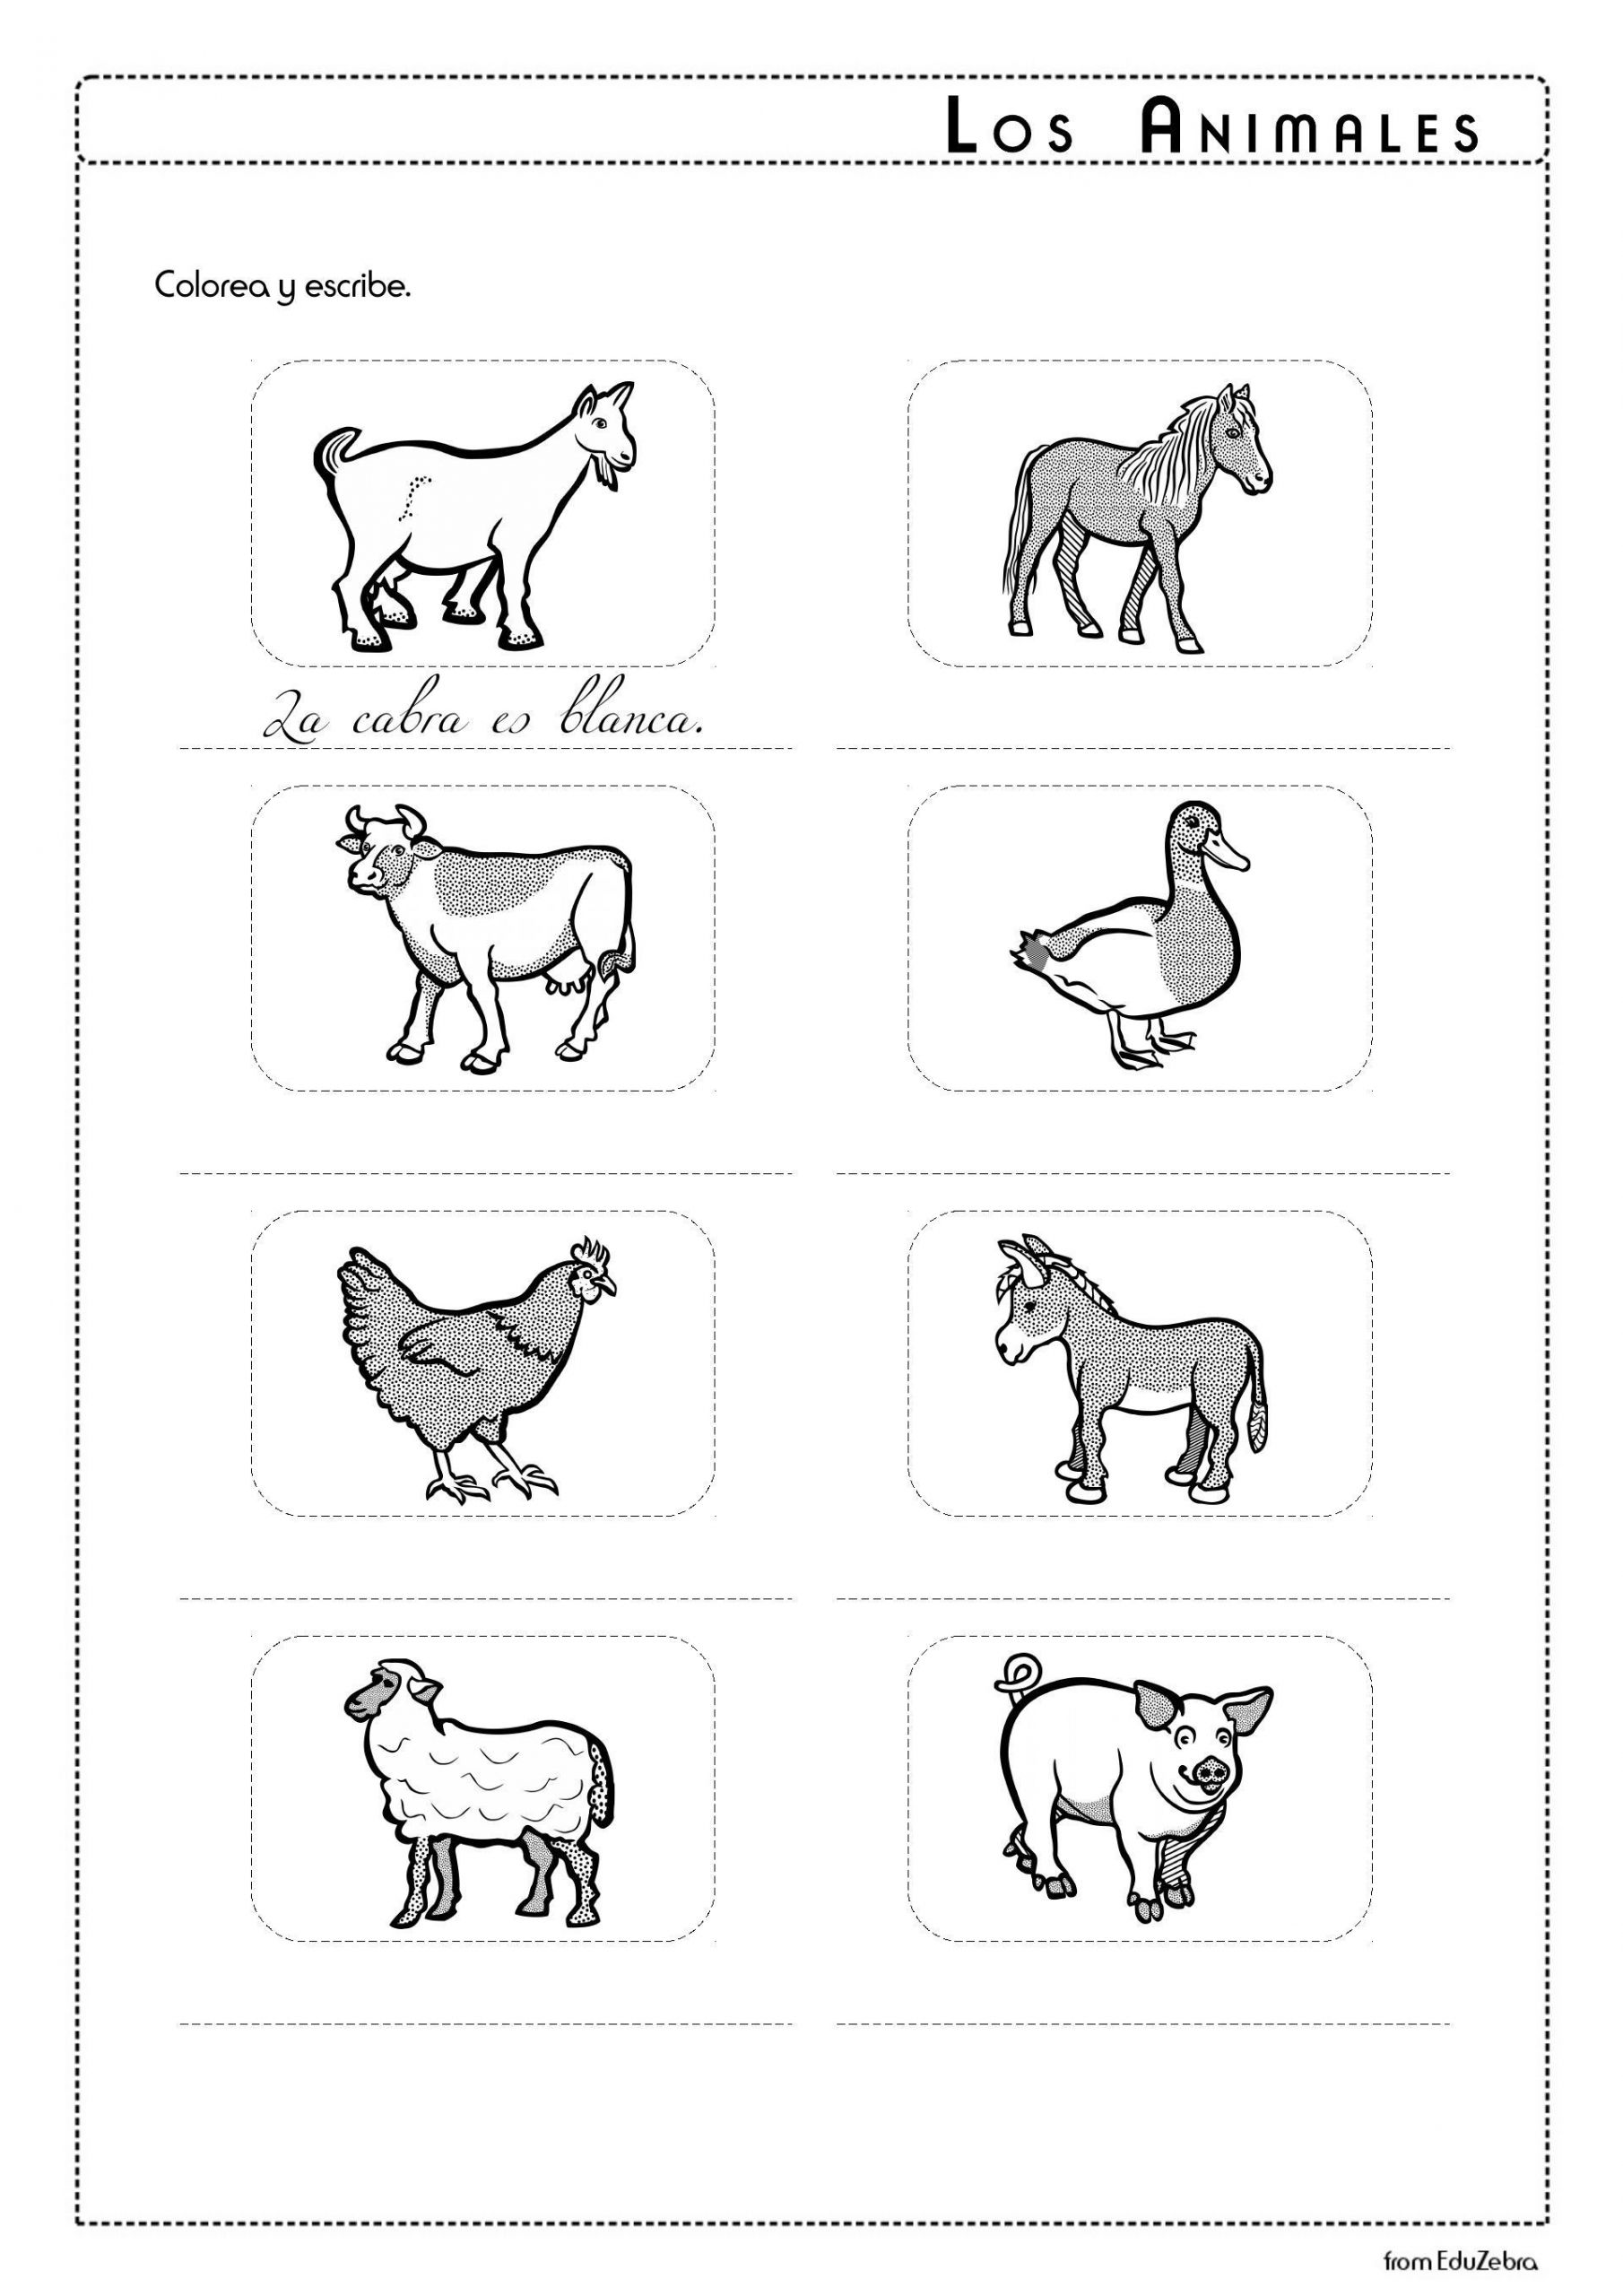 Farm Animals Flashcards Printable